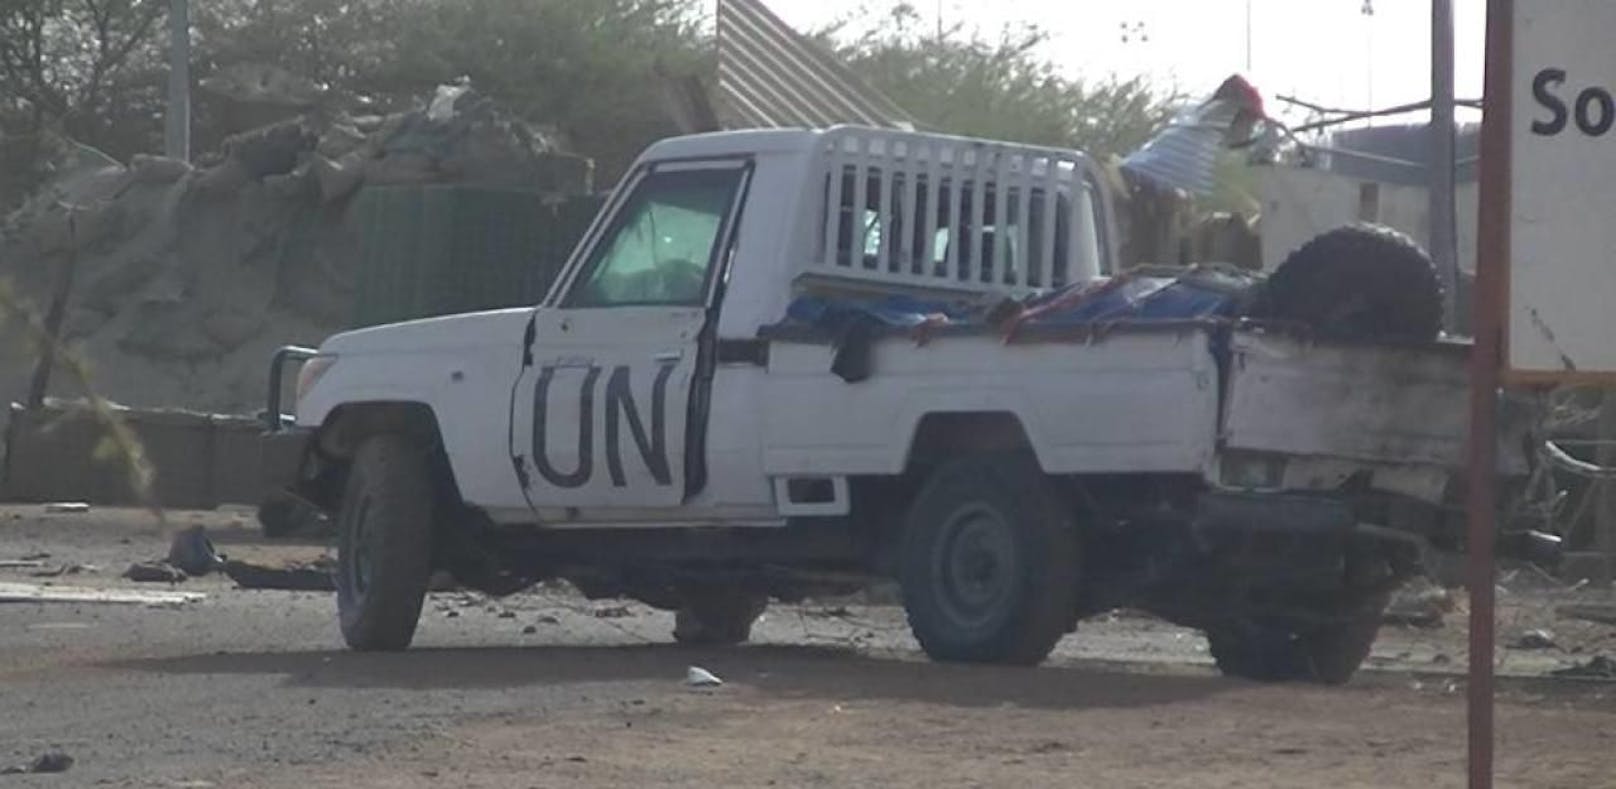 Angriff auf Blauhelme mit Fake-UN-Fahrzeugen